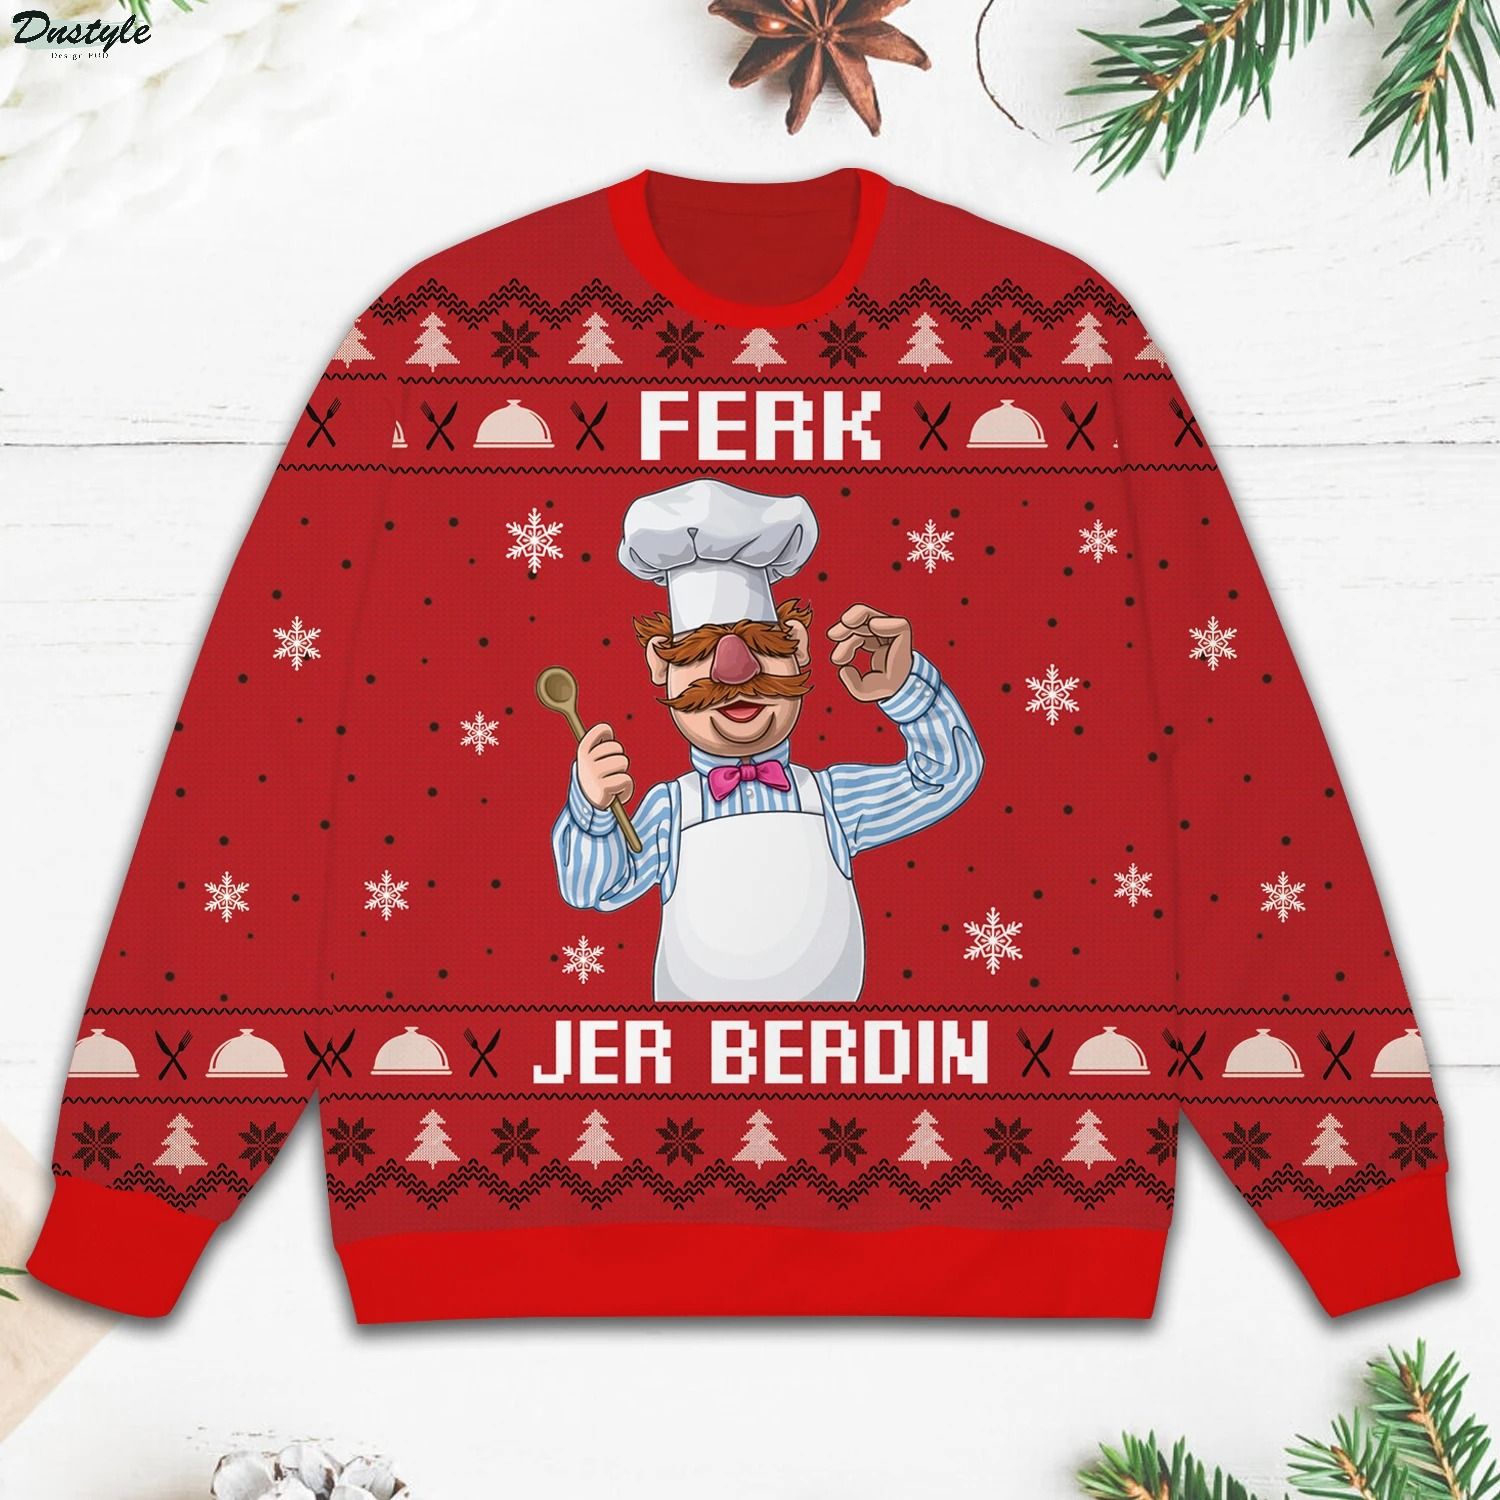 Ferk Jer Berdin The Swedish Chef Red Christmas Ugly Sweater 1